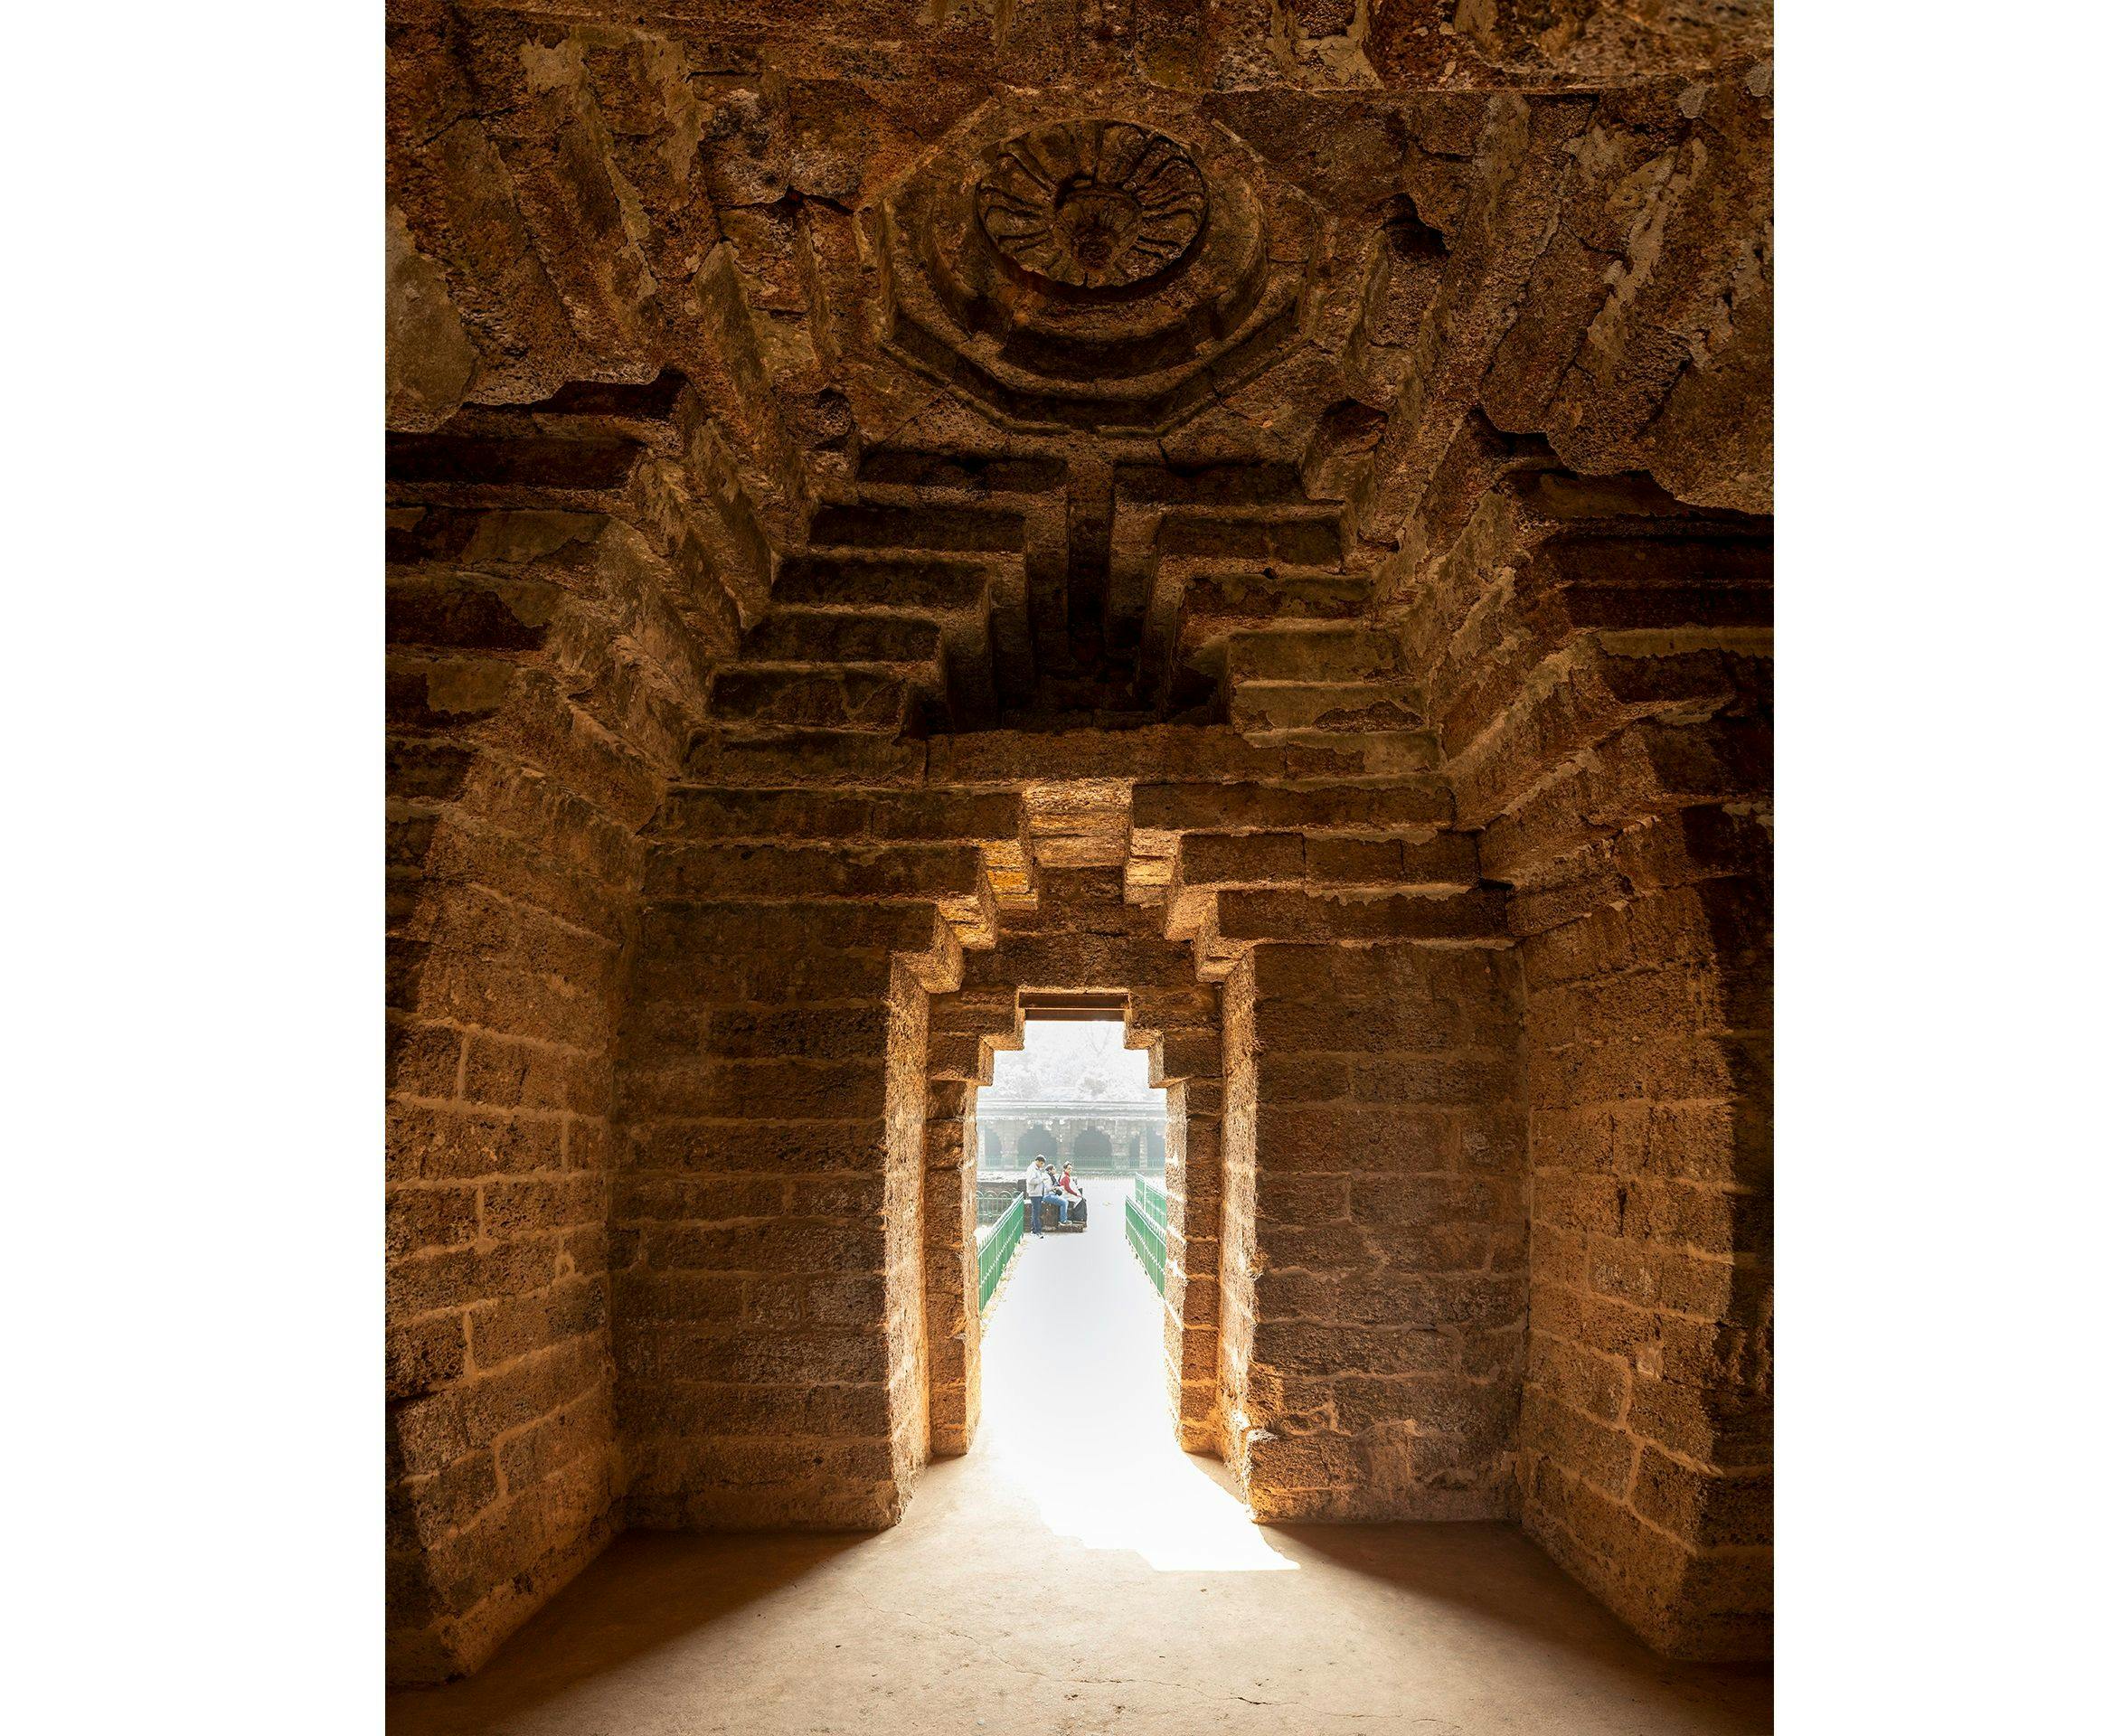 Kurumbera Fort’s corbelled arch with lotus motif